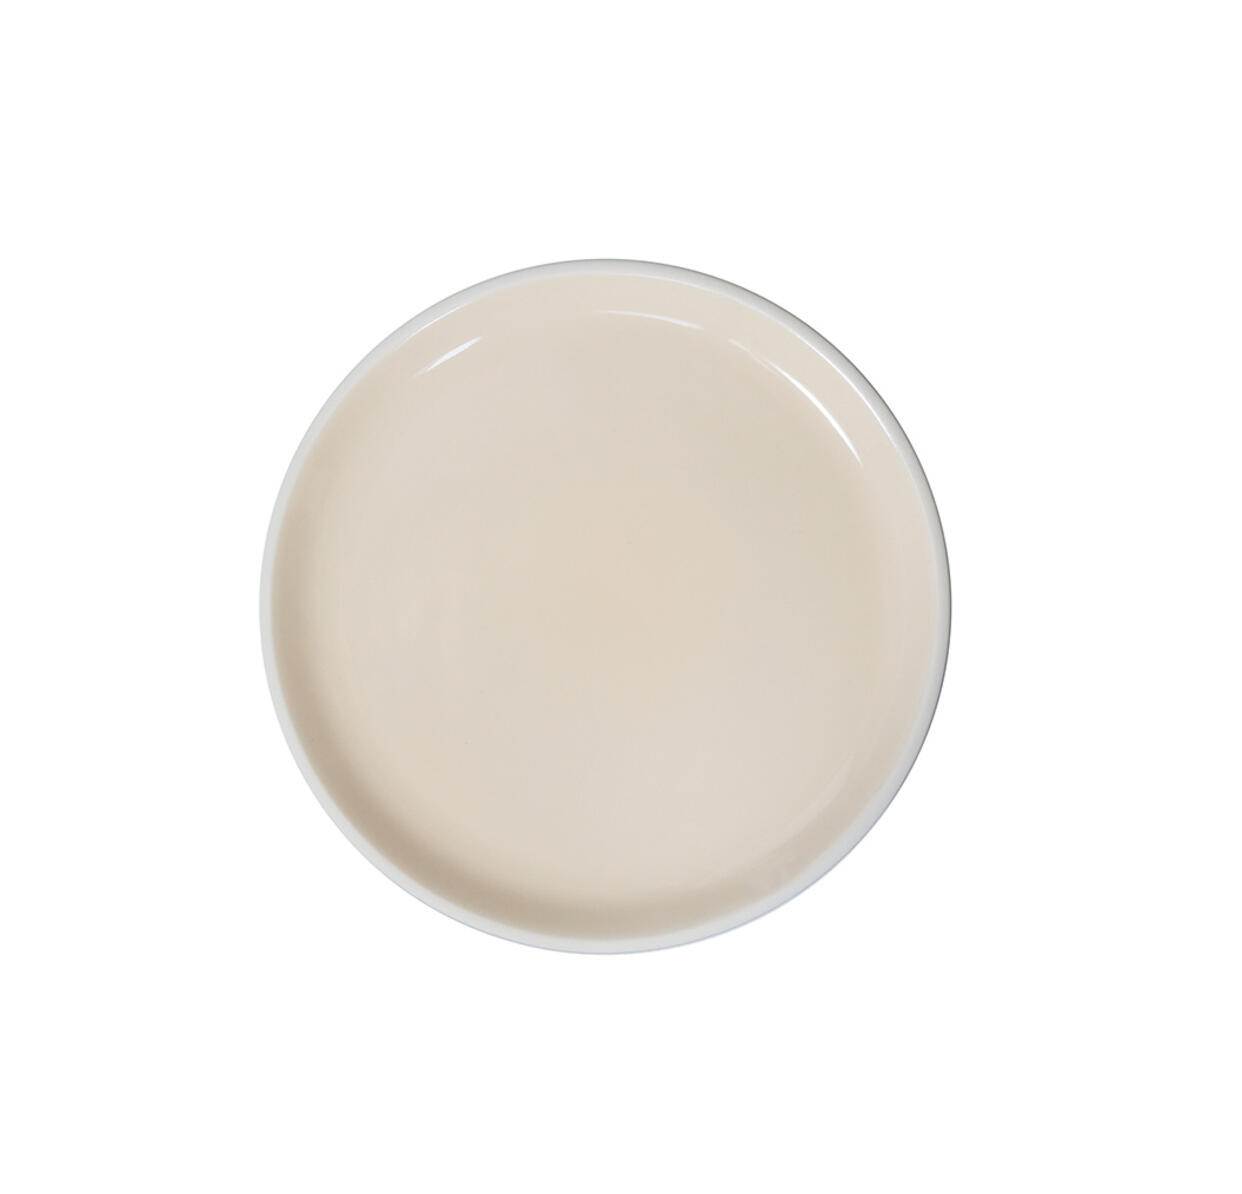 plate s studio 2.0 nude.cobalt ceramic manufacturer